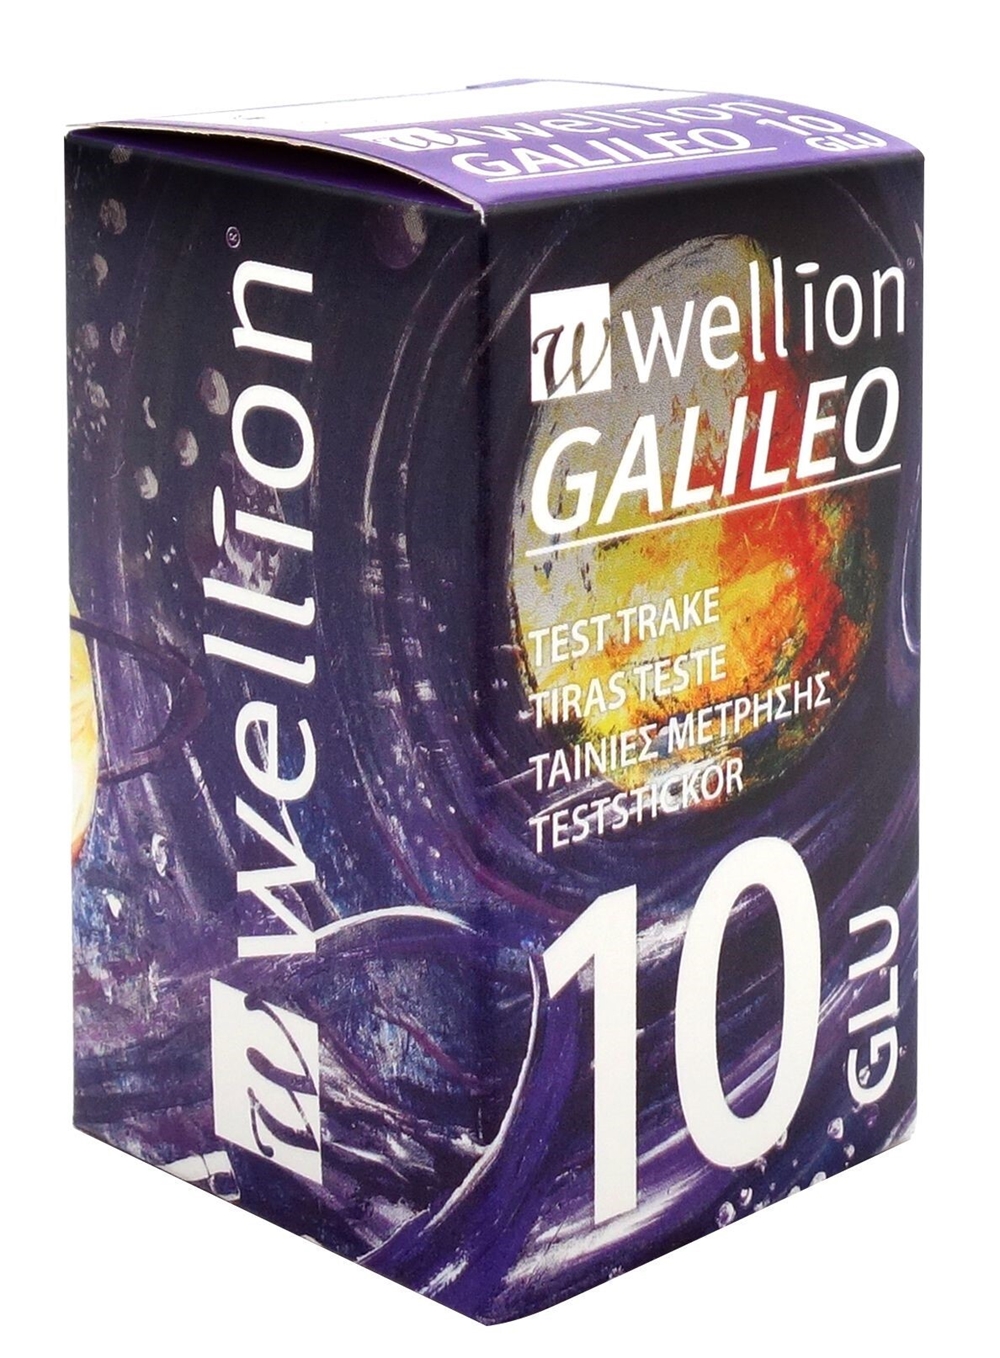 Teststickor Wellion GALILEO - Wellion Galileo - 10 st